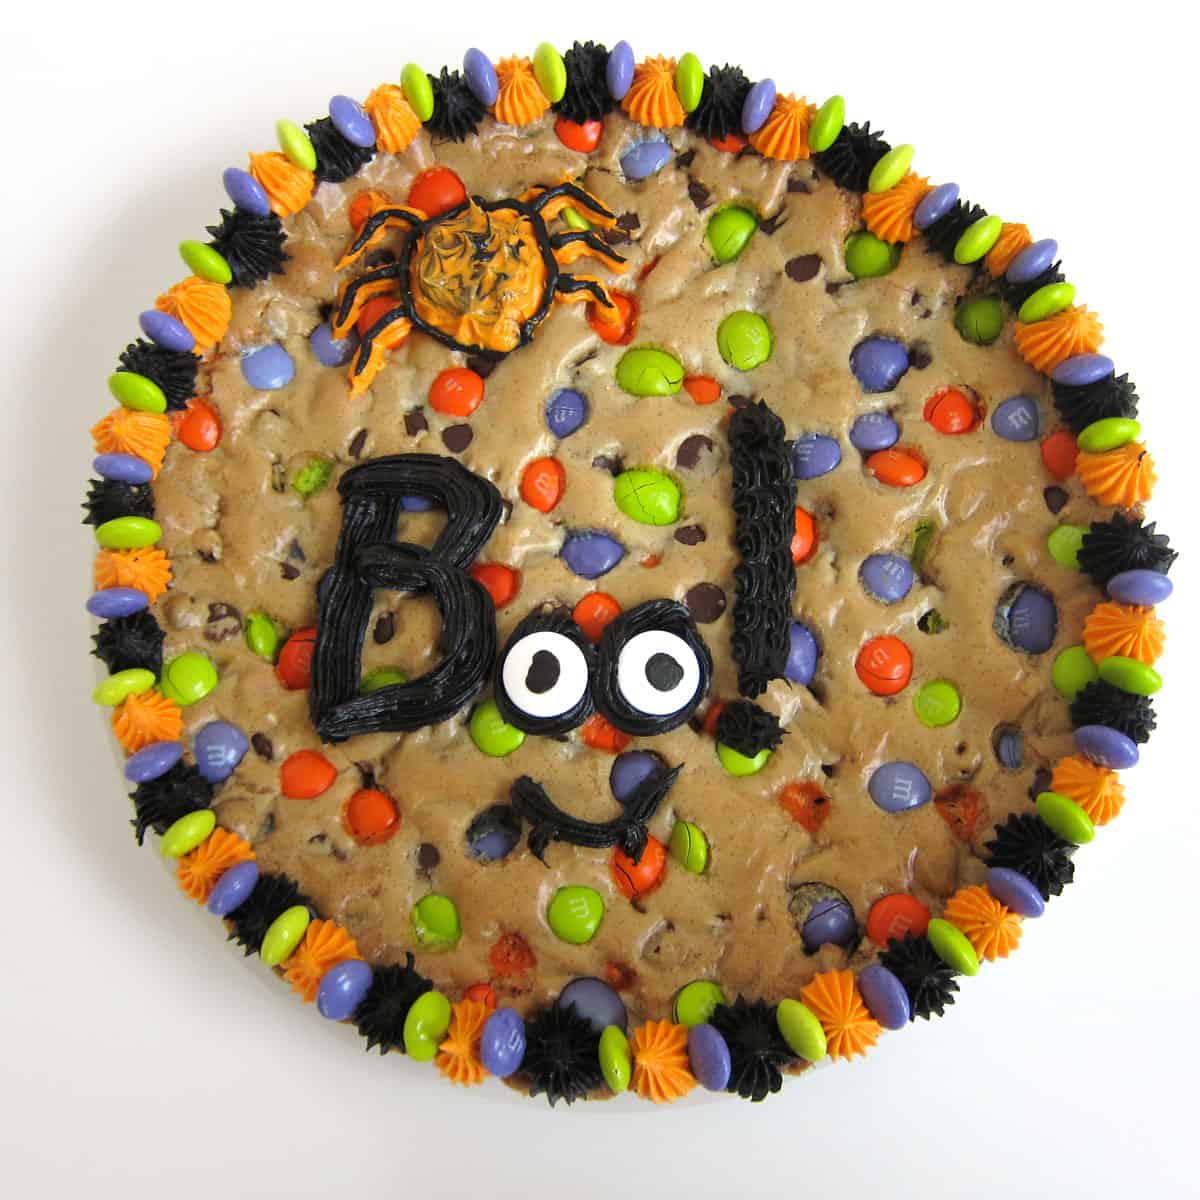 Halloween cookie cake for kids